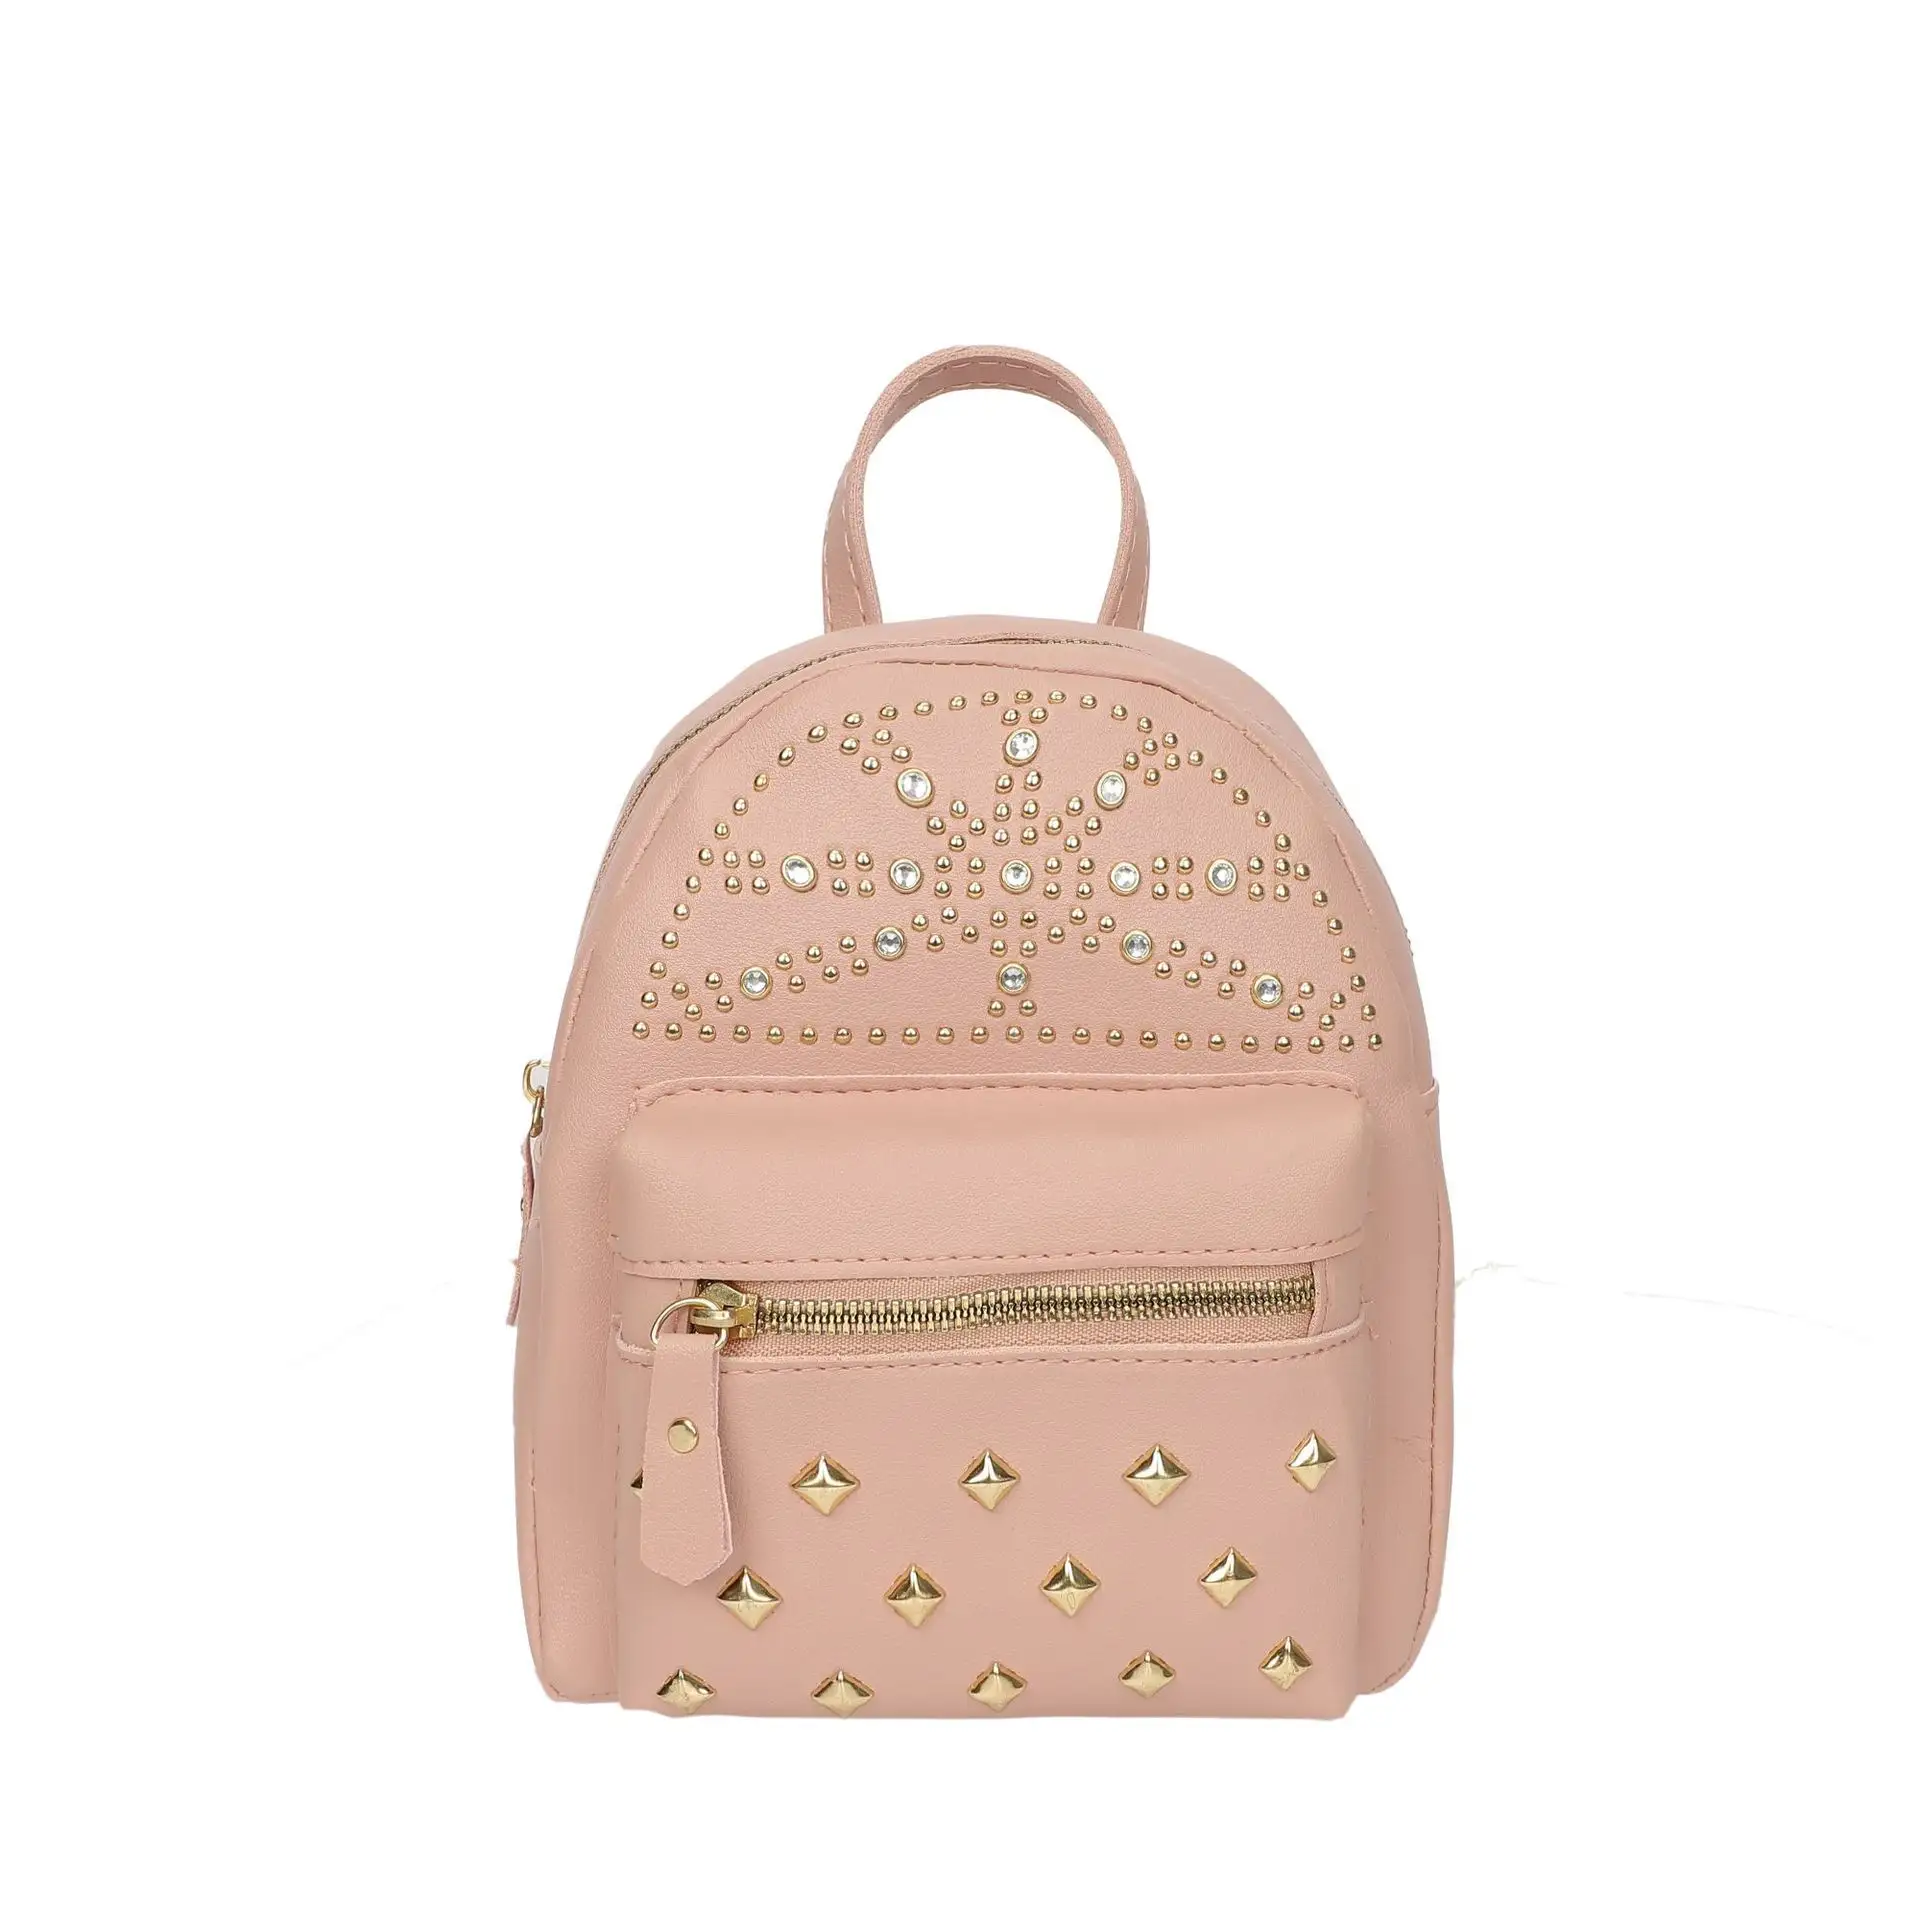 BESTELLA Wholesale Fashion Teenager Girls Backpack Female England Style Retro Handbag Rivet Mini Backpack Pu Leather School Bag